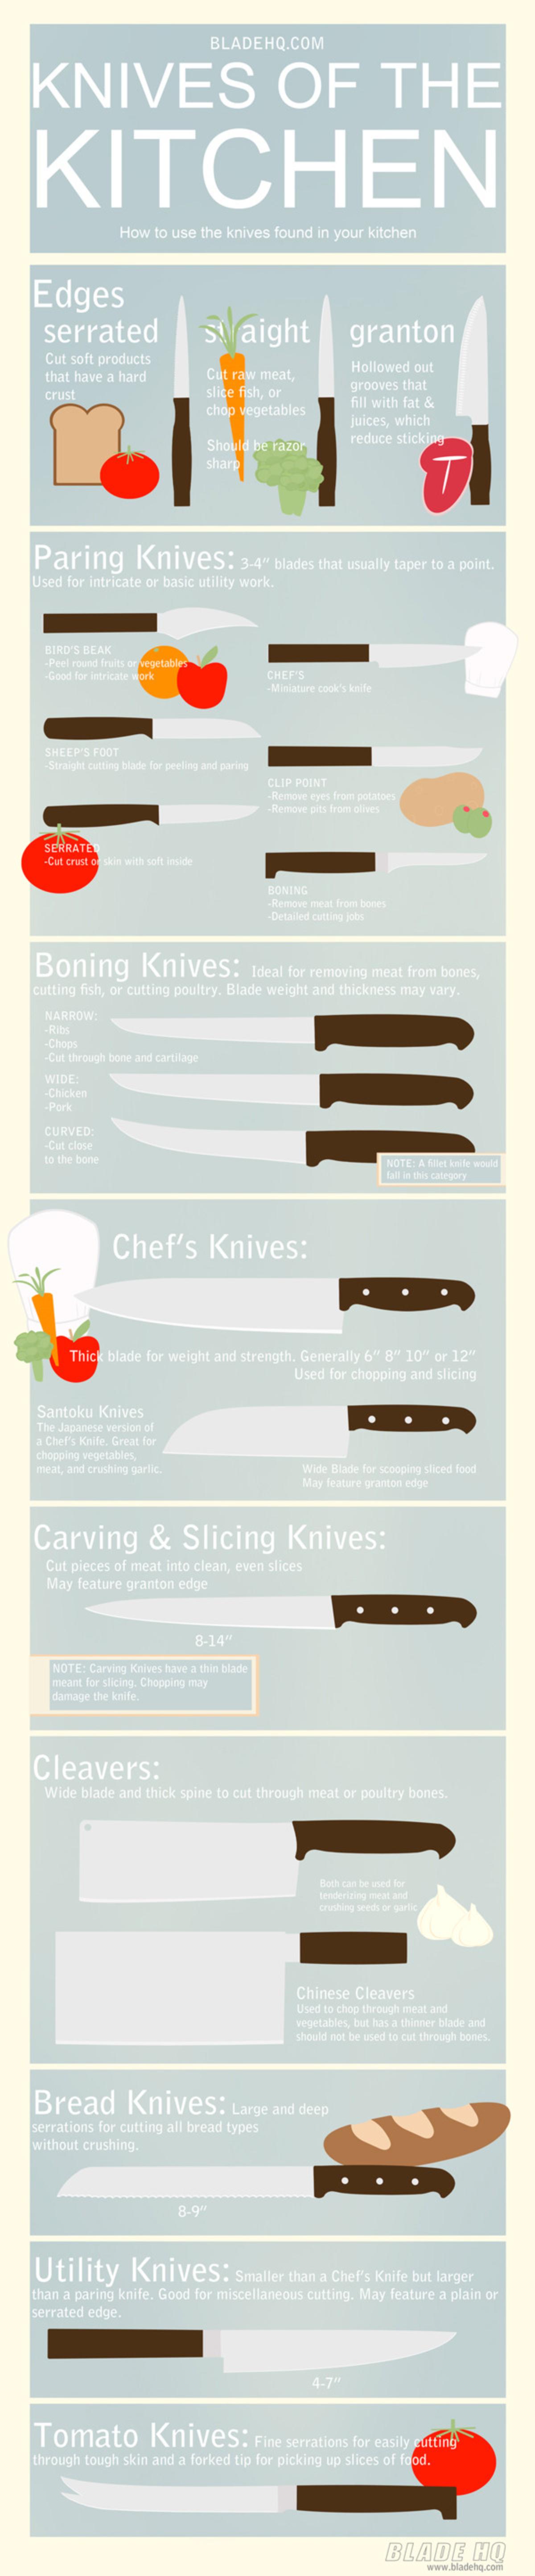 Knives Guide Sheet